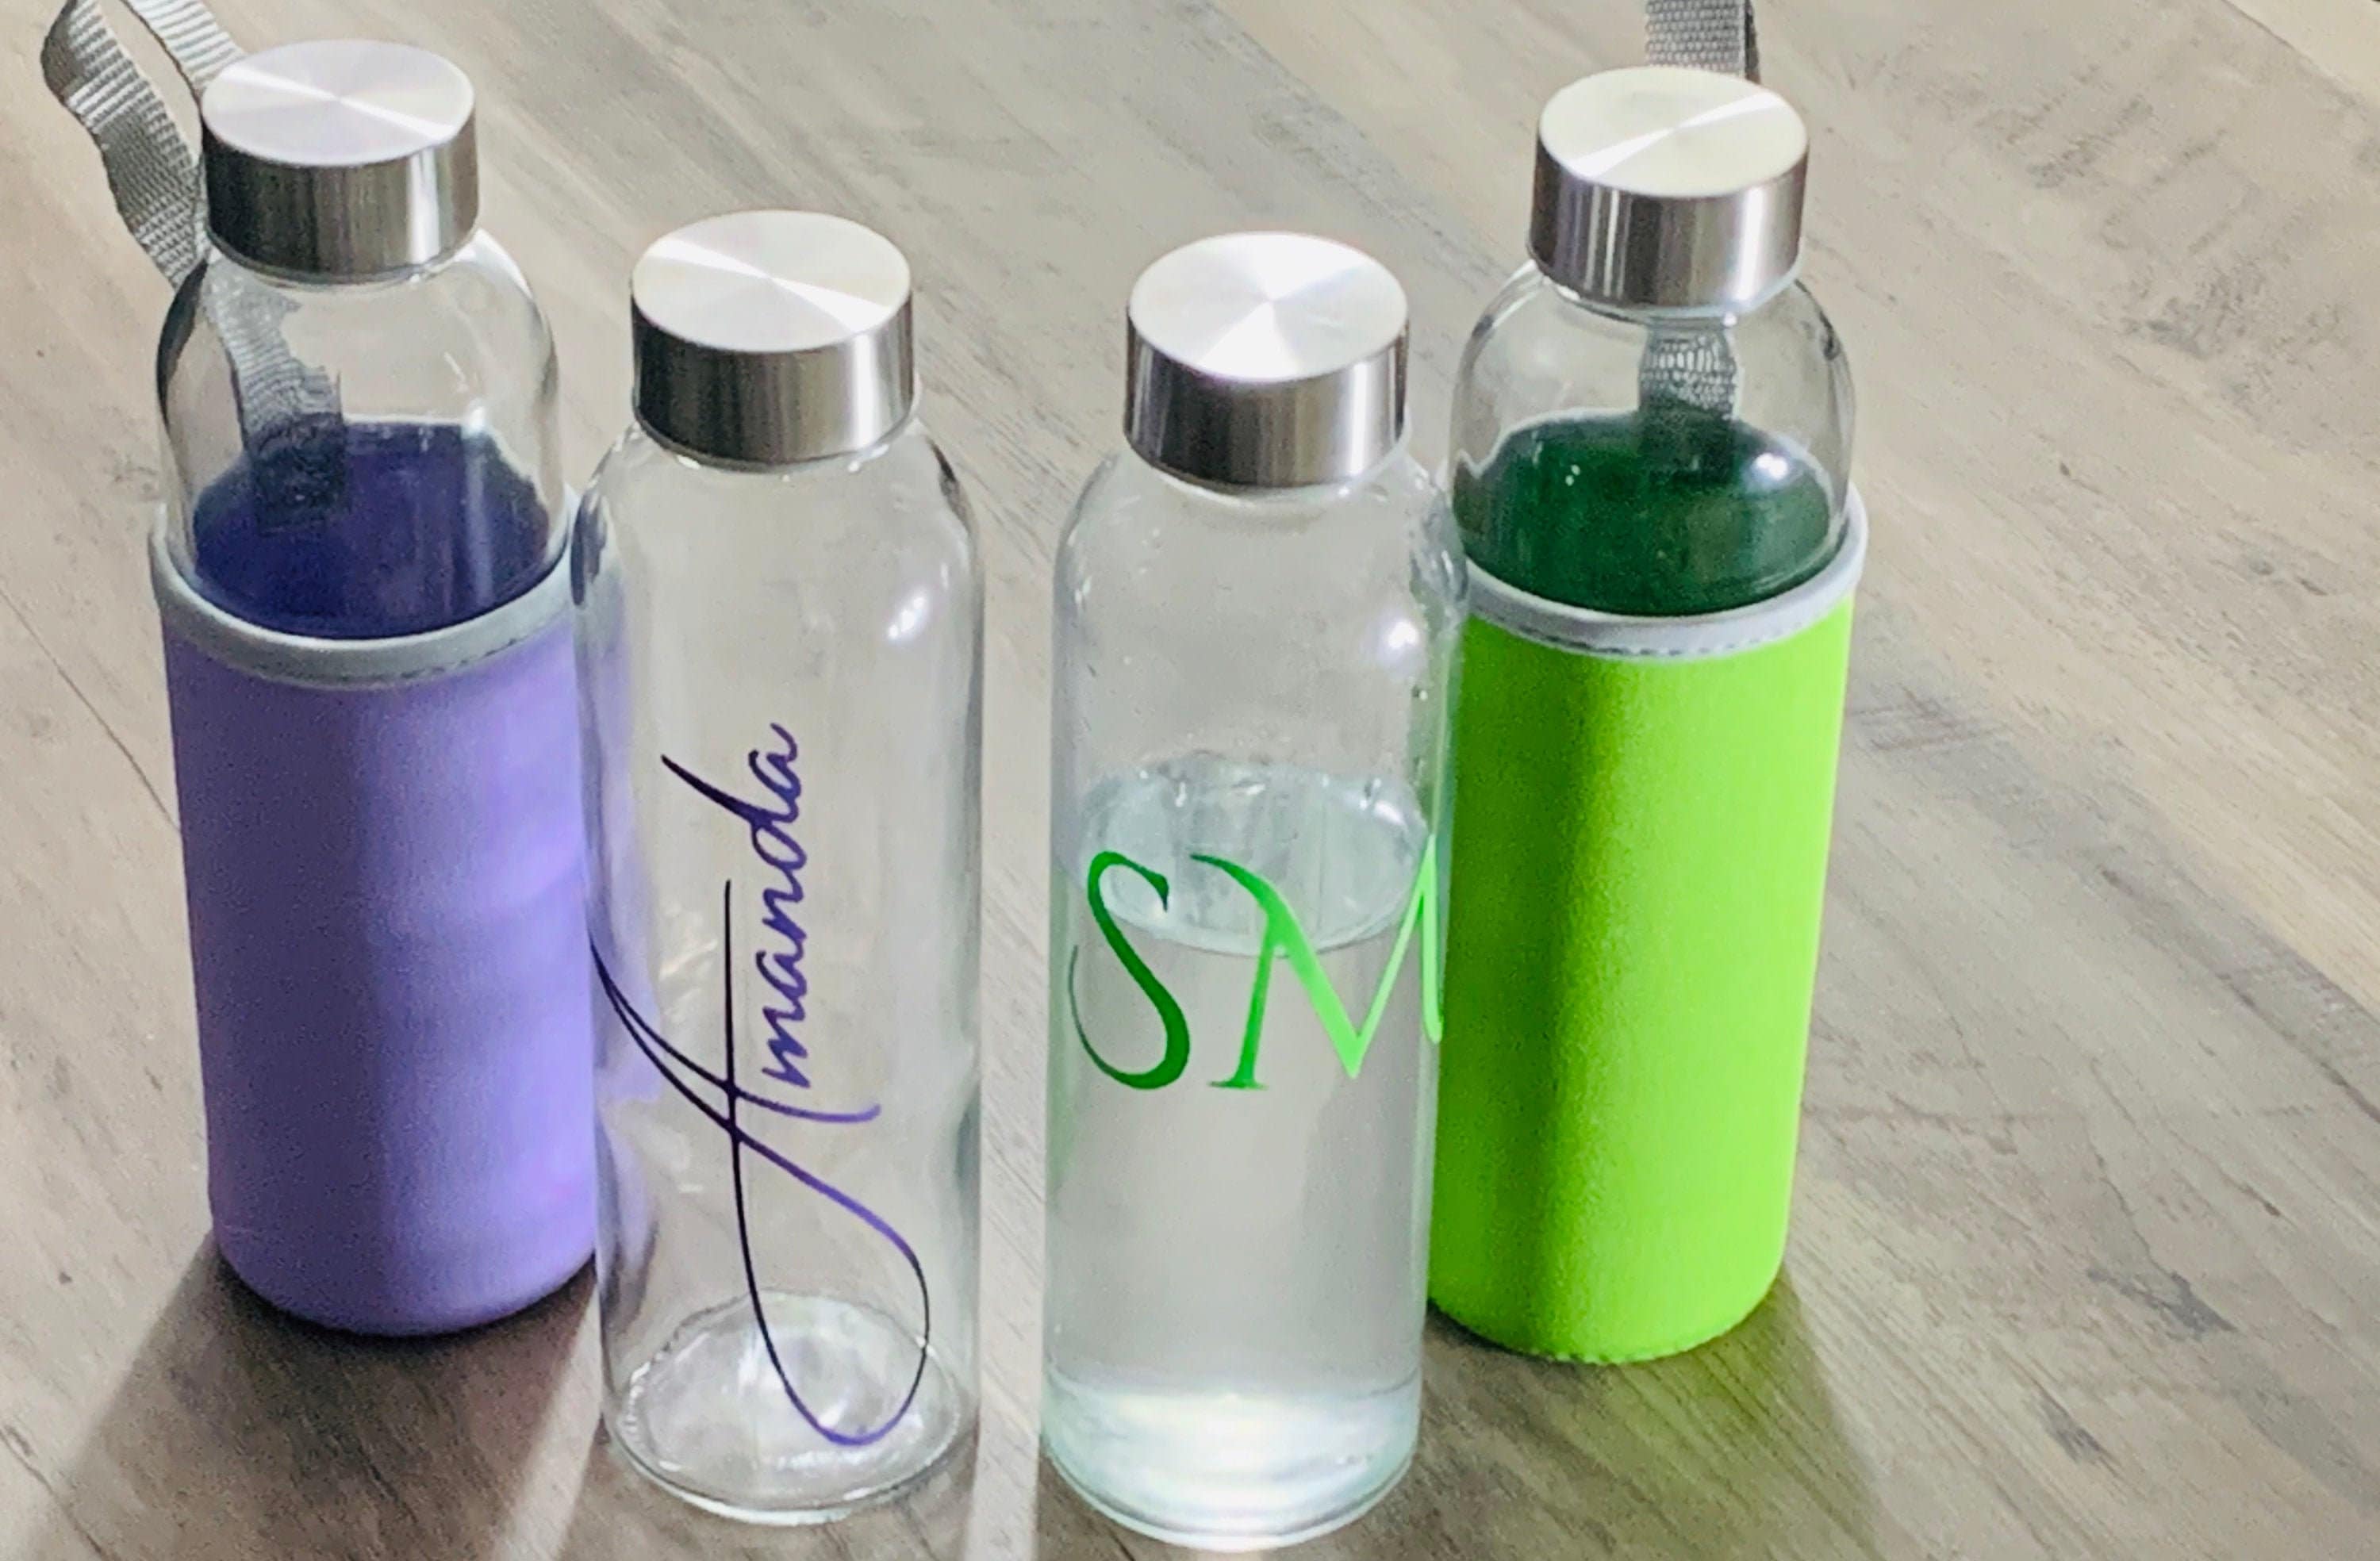 Slim 400ml Beautiful Gifts Custom Glass Clear Water Bottle - China Clear  Glass Water Bottle and Glass Water Bottles price